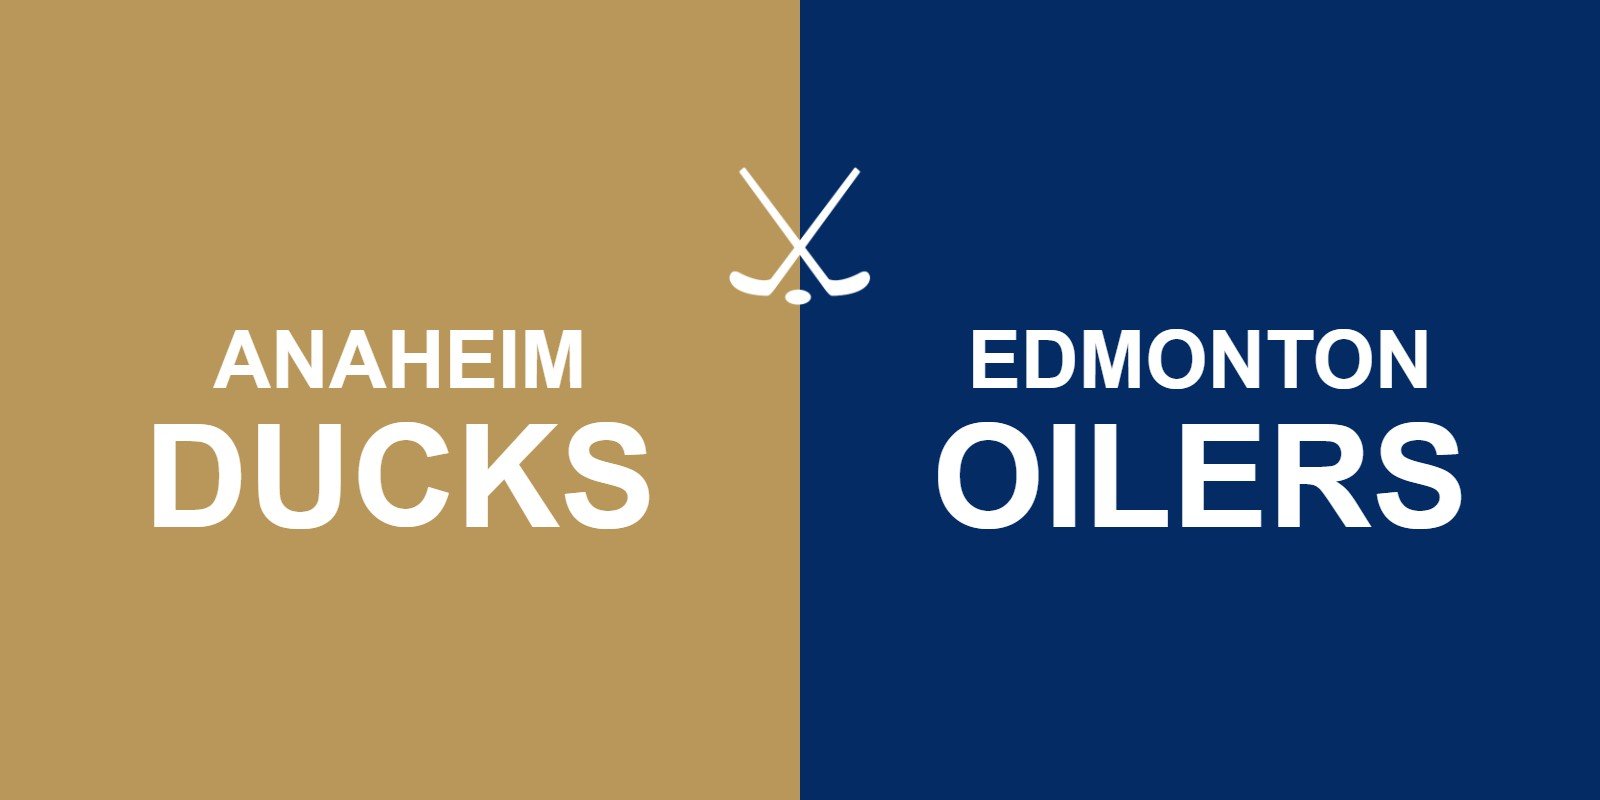 Ducks vs Oilers